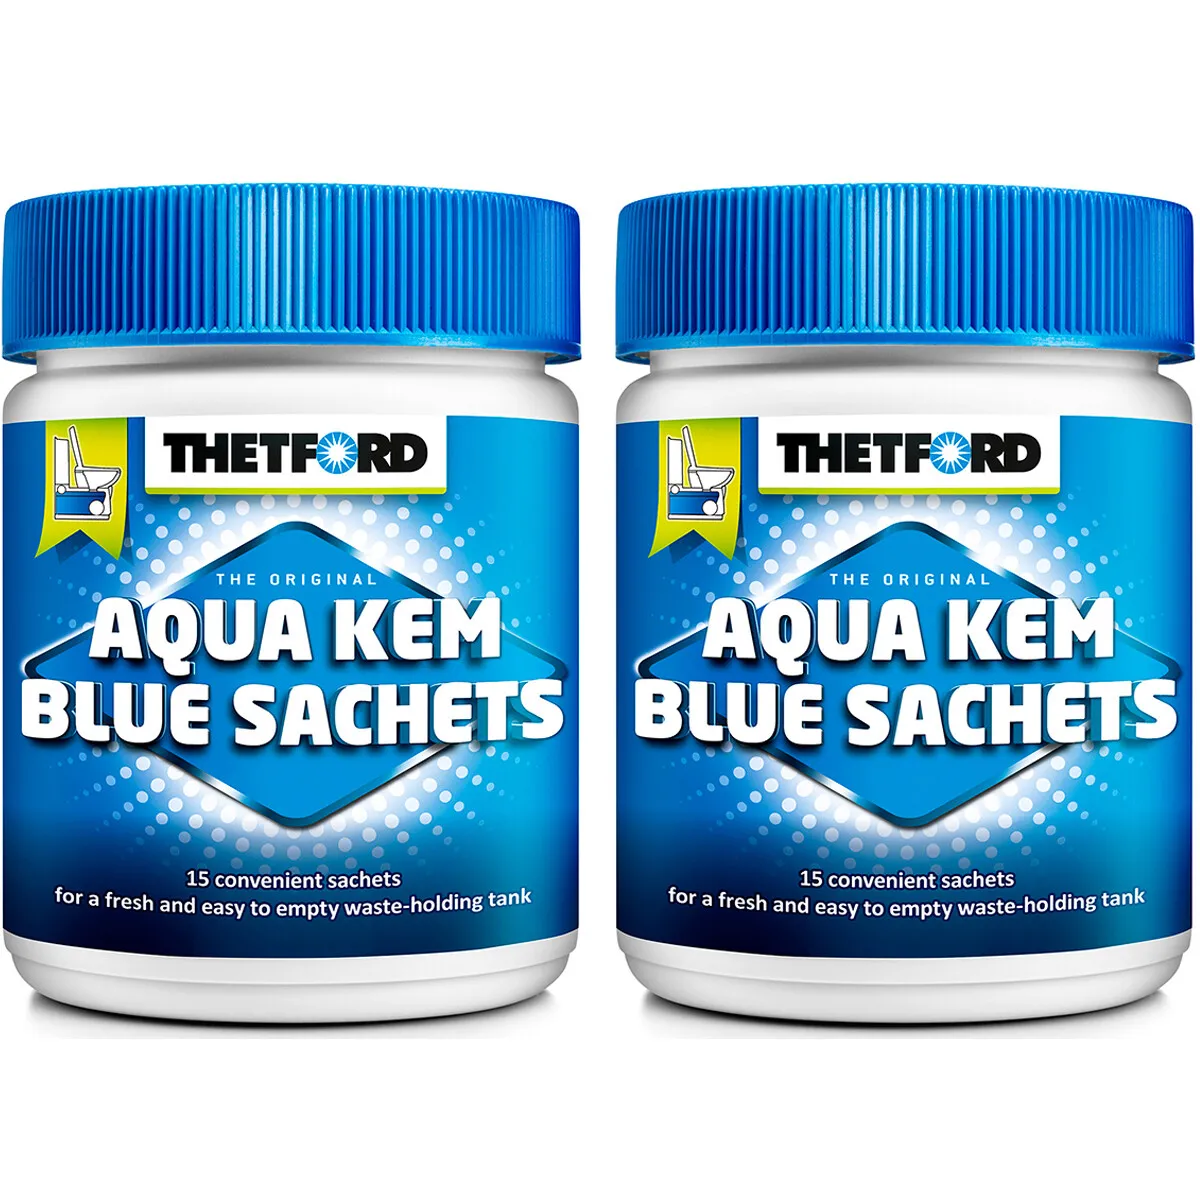 Aqua Kem Blue Sachets Thetford 30 BEUTEL Sanitärzusatz Campingtoilette WC  8710315990652